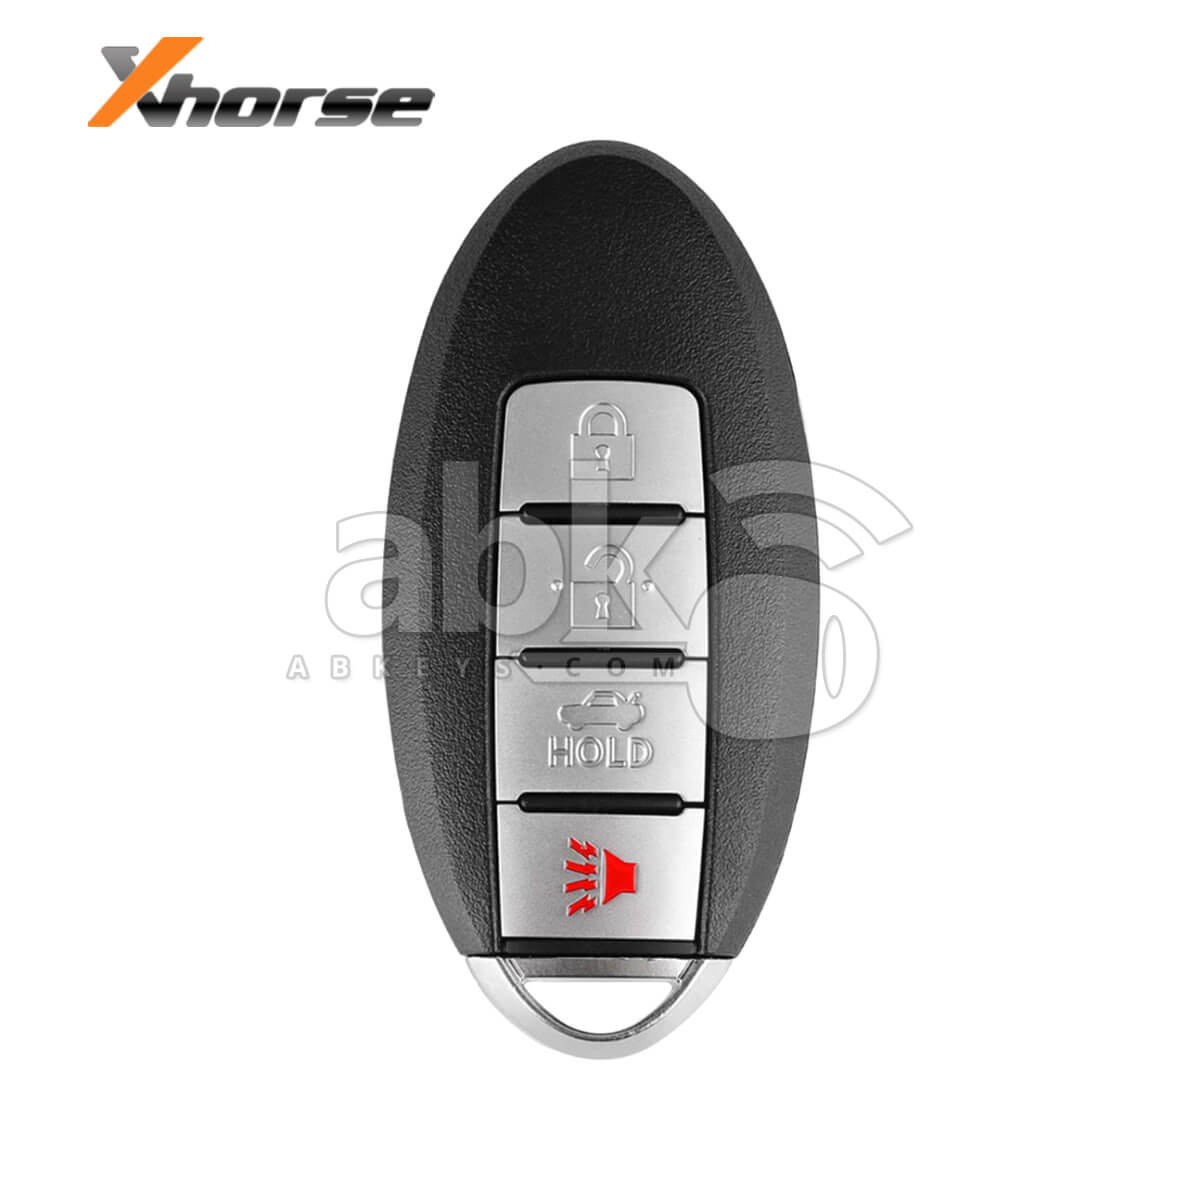 Xhorse Universal Smart Key XSNIS2EN Nissan Style 4Buttons - ABK-4488-XSNIS2EN - ABKEYS.COM